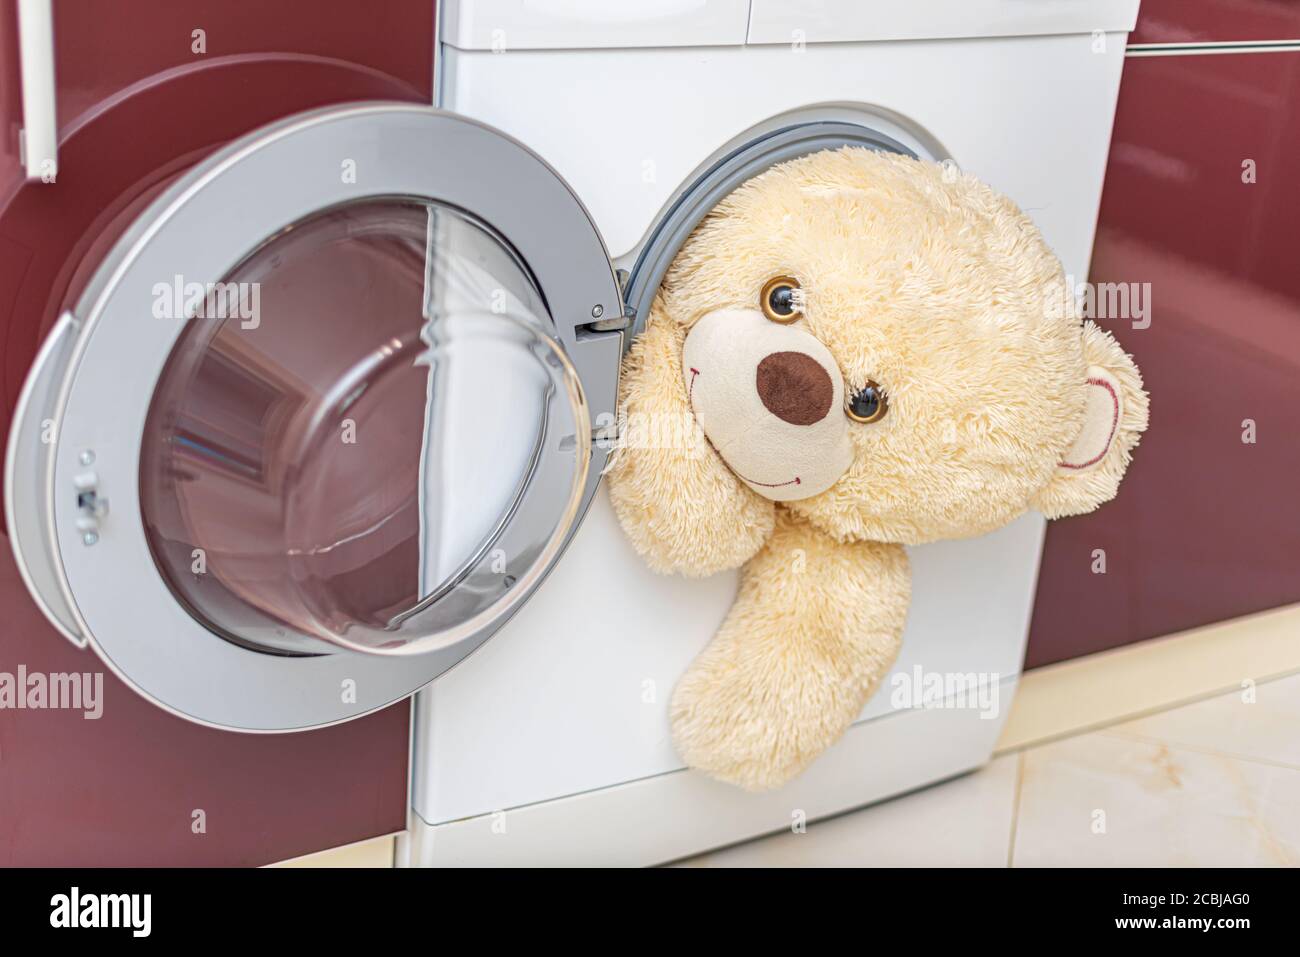 washing teddy bear in washing machine